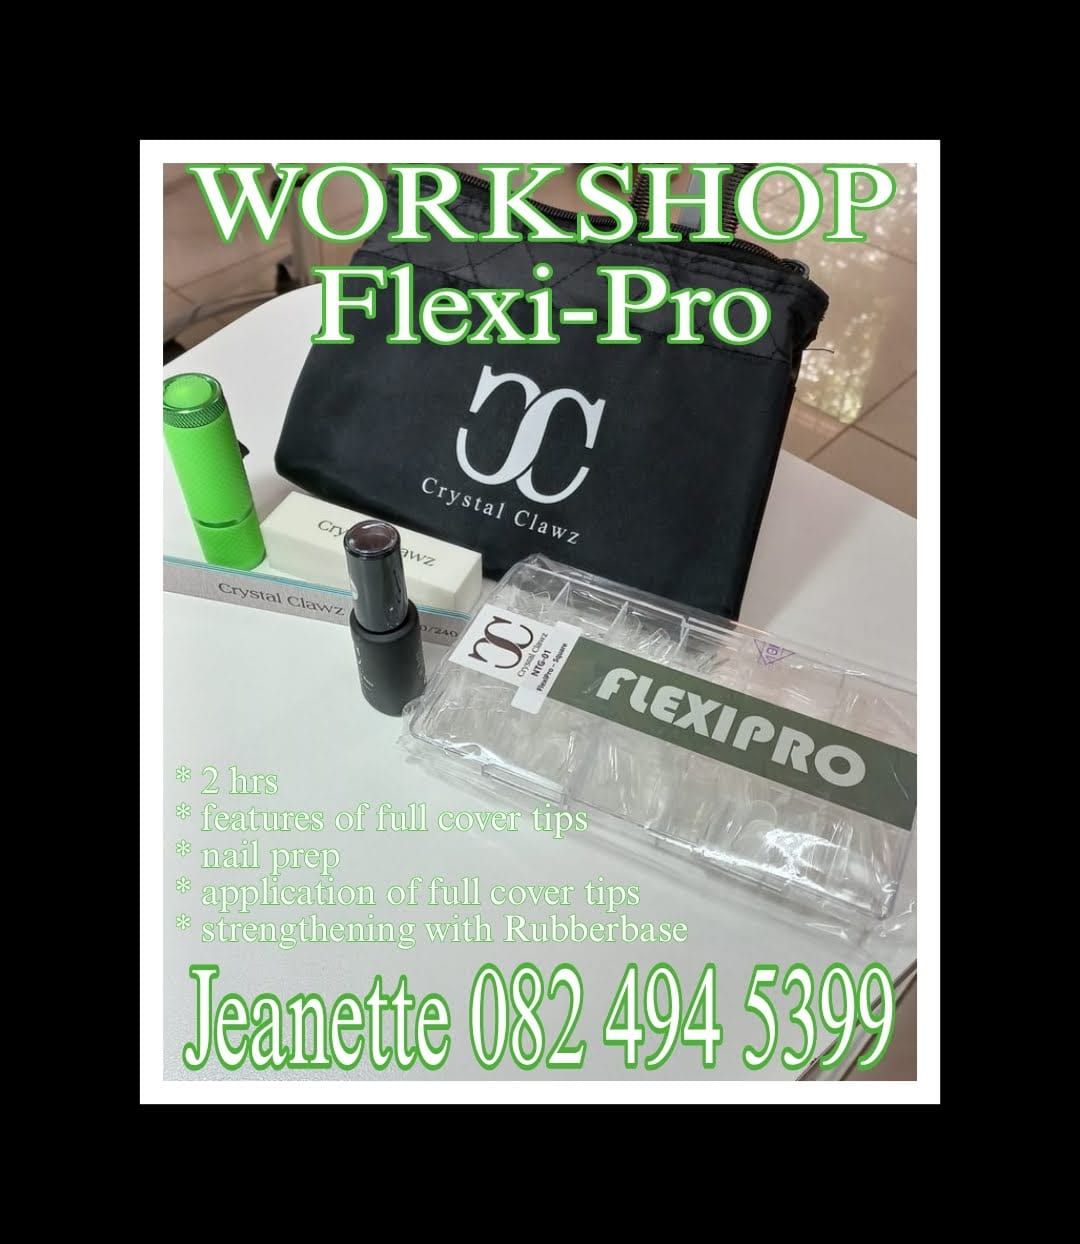 Flexi-Pro Workshop